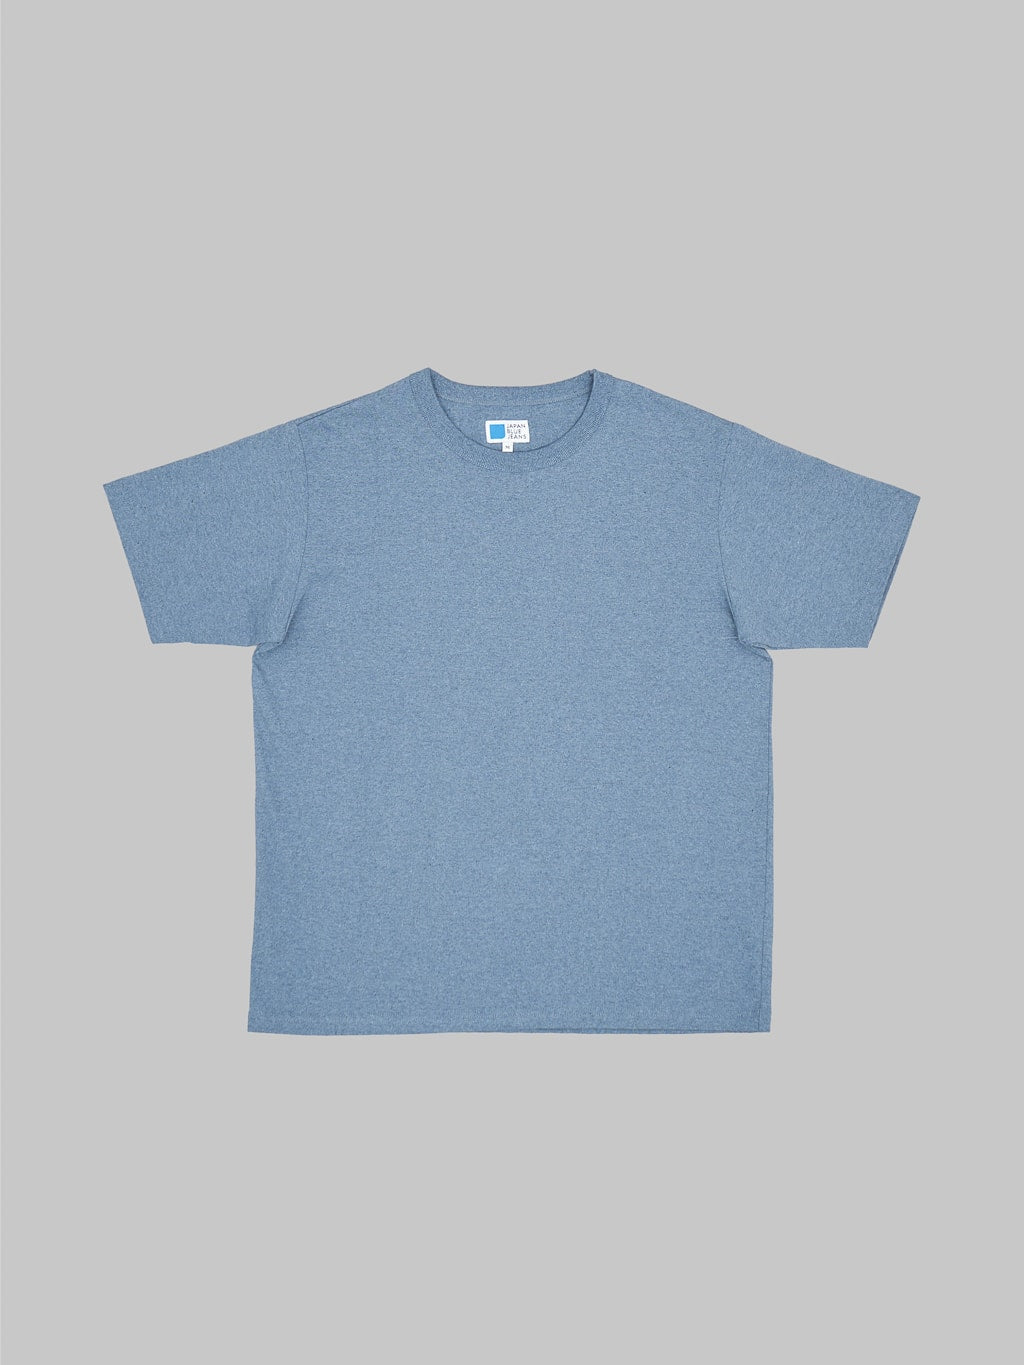 Japan Blue Recycled Denim Tshirt mid Indigo front